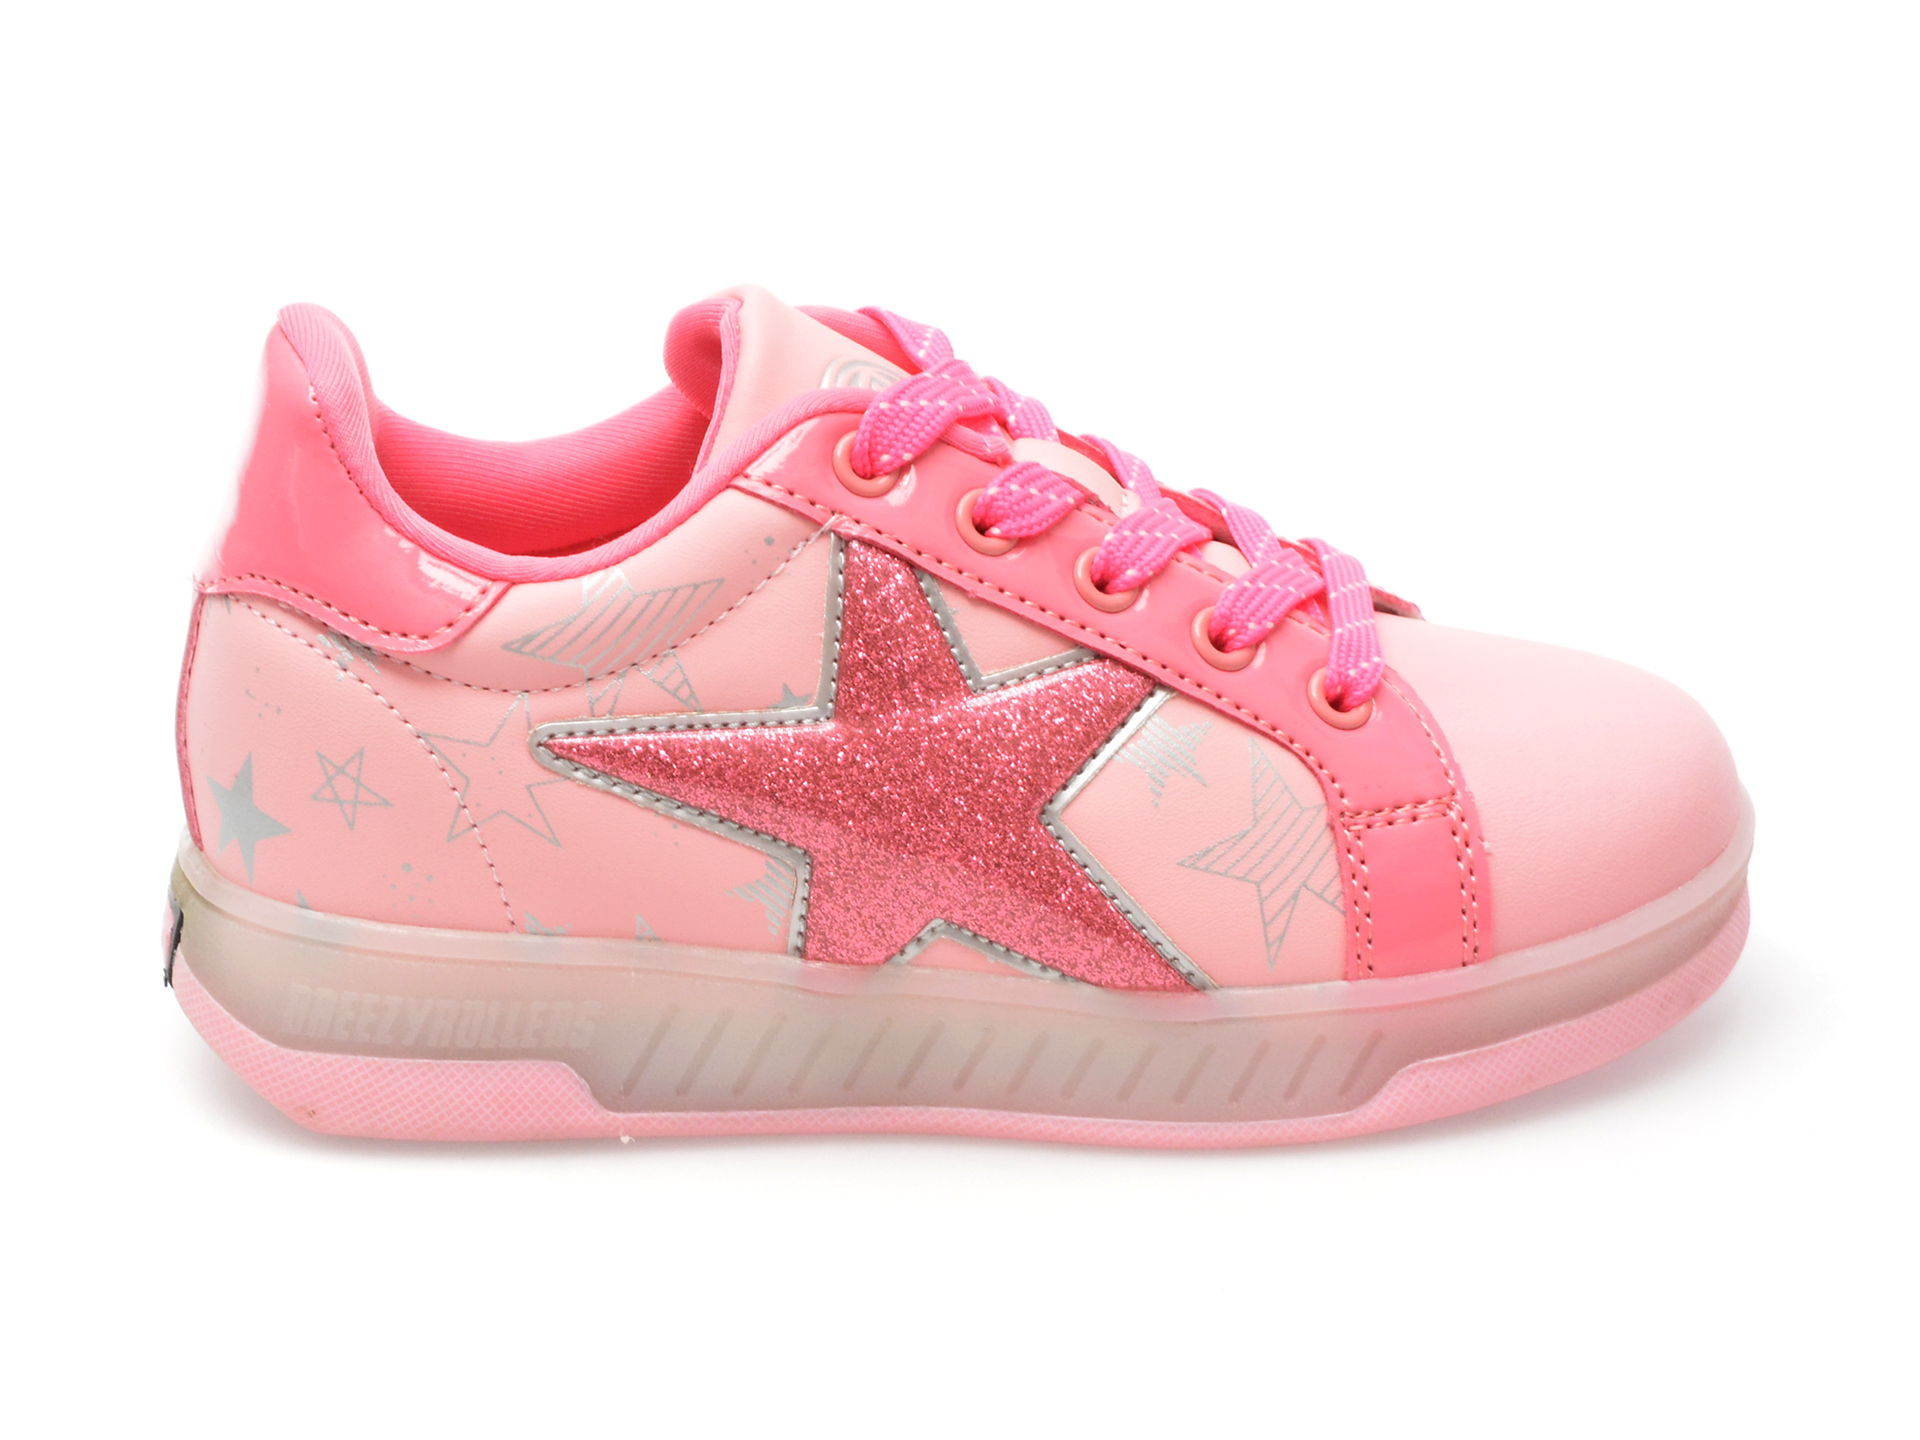 Pantofi BREEZY ROLLERS roz, 2195680, din piele naturala